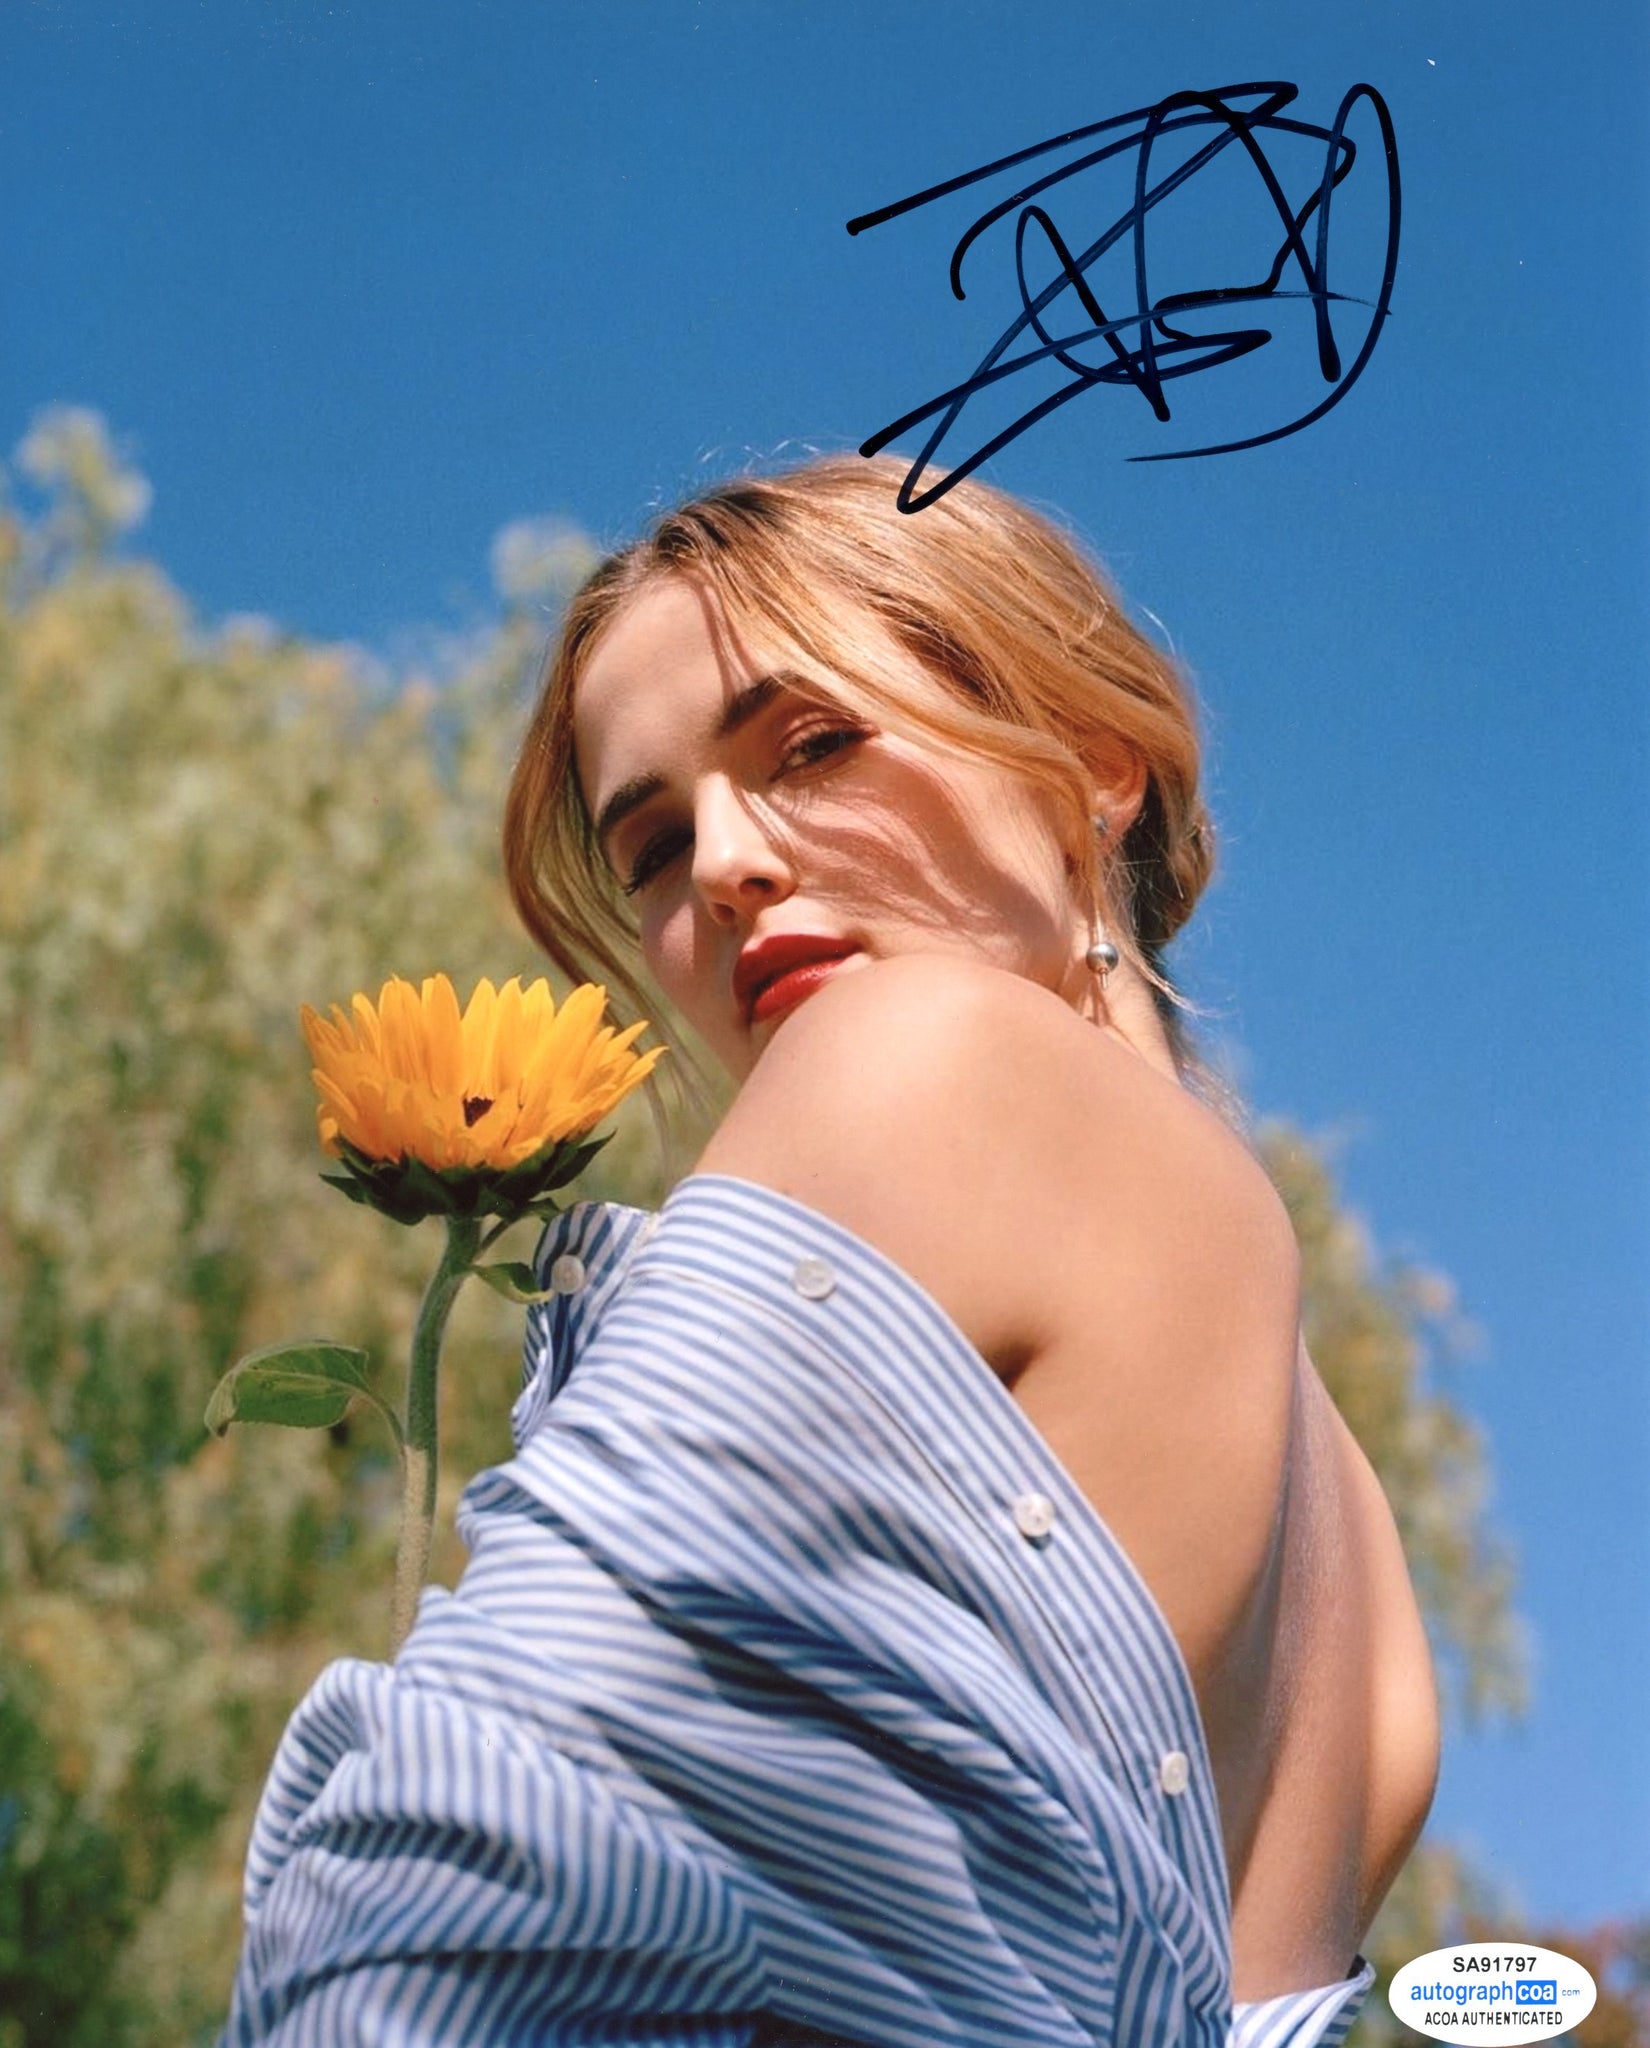 Zoey Deutch Sexy Signed Autograph 8x10 Photo ACOA